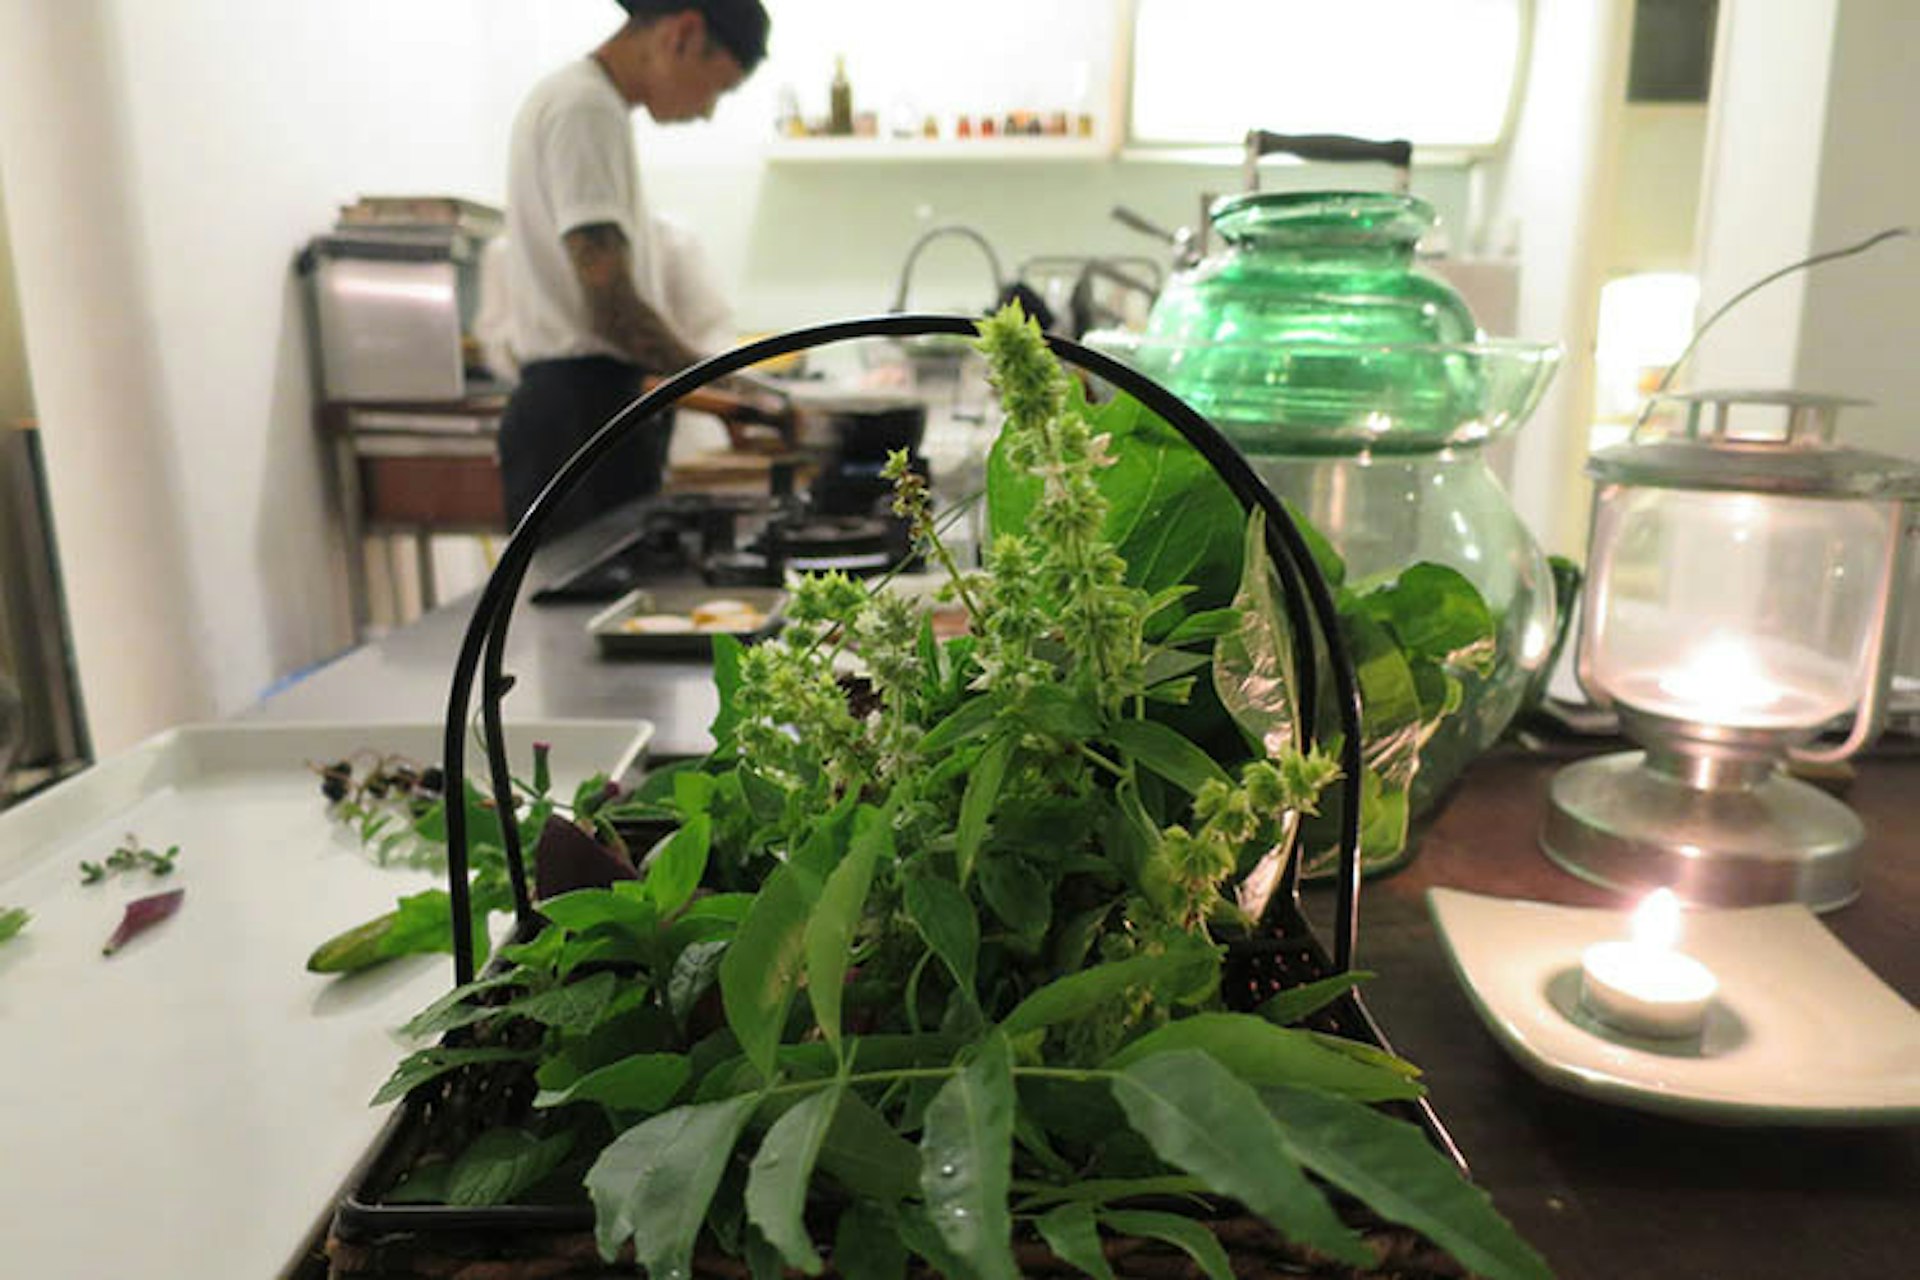 Fresh herbs on the menu at Yin Yang Coastal. Image by Megan Eaves / Lonely Planet